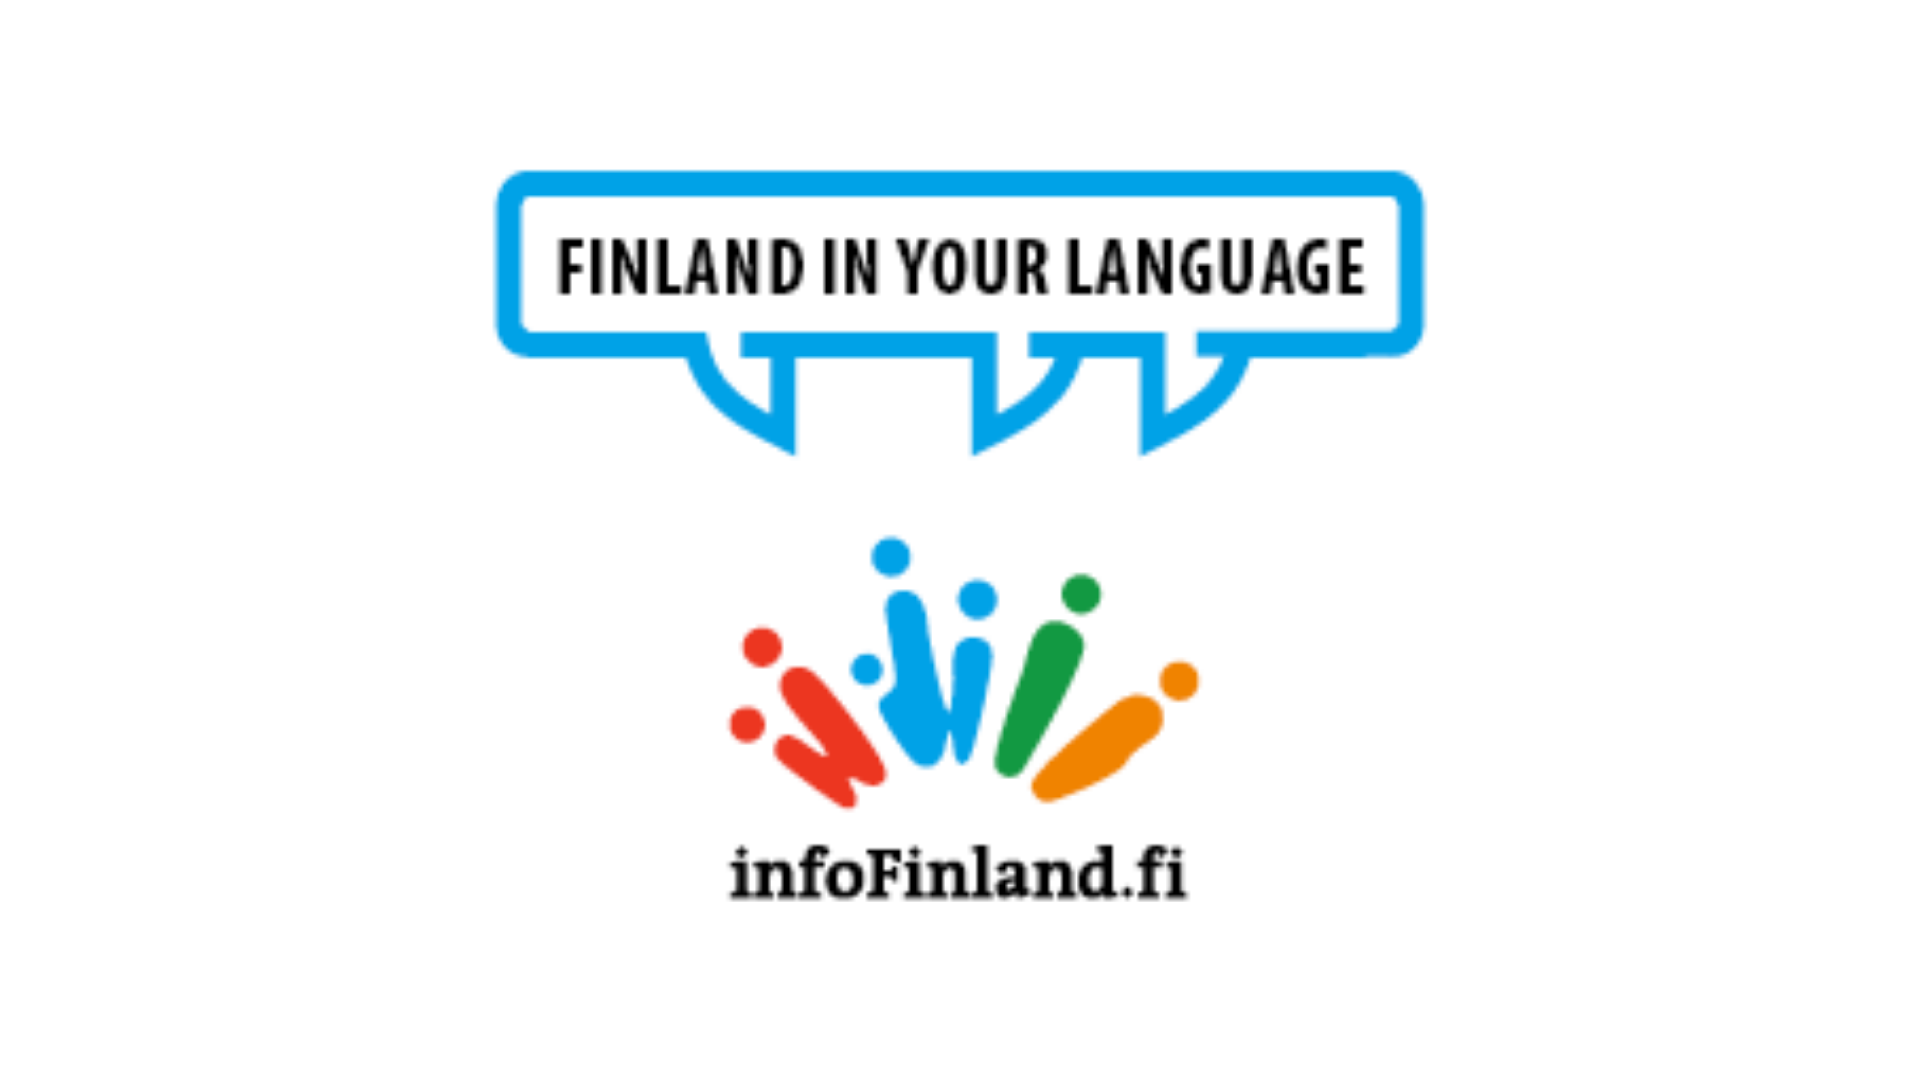  Infofinland.fi:n logo. 